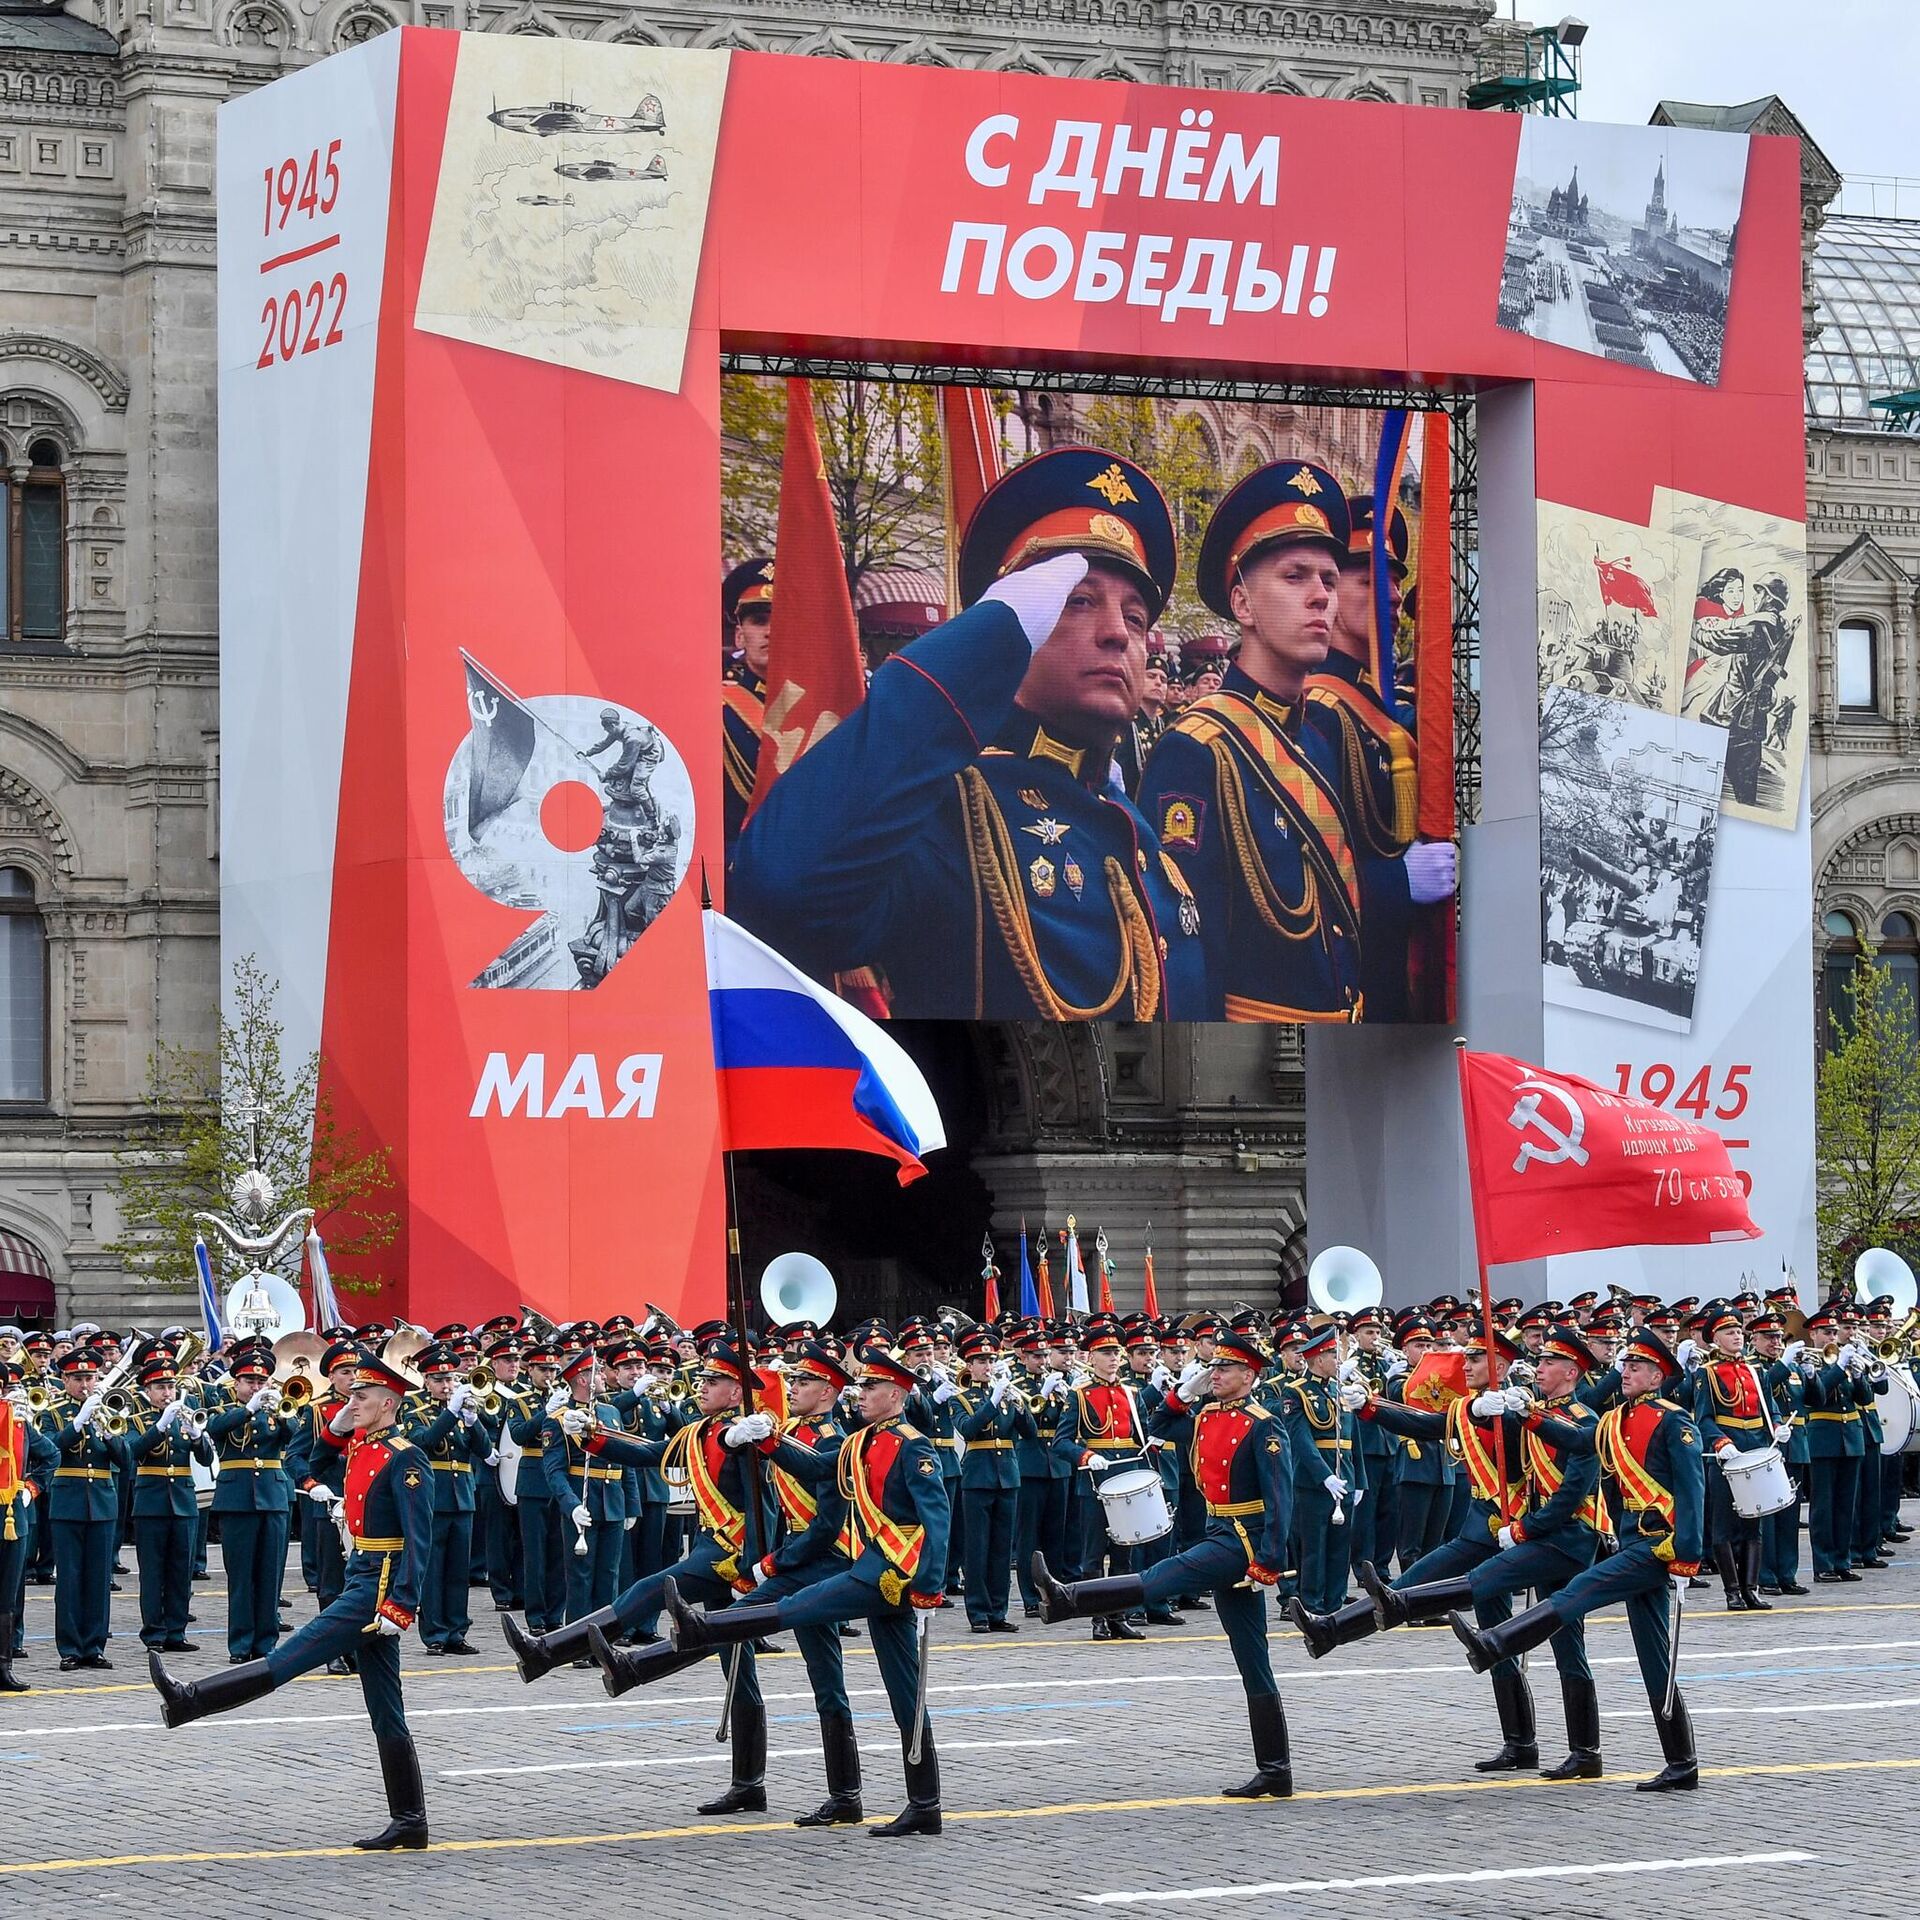 2025 й год. Парад Победы 9 мая 2022 в Москве. Военный парад на красной площади 9 мая 2022. Парад на красной площади в Москве 2022. Парад 9 мая в Москве 2022 на красной площади.